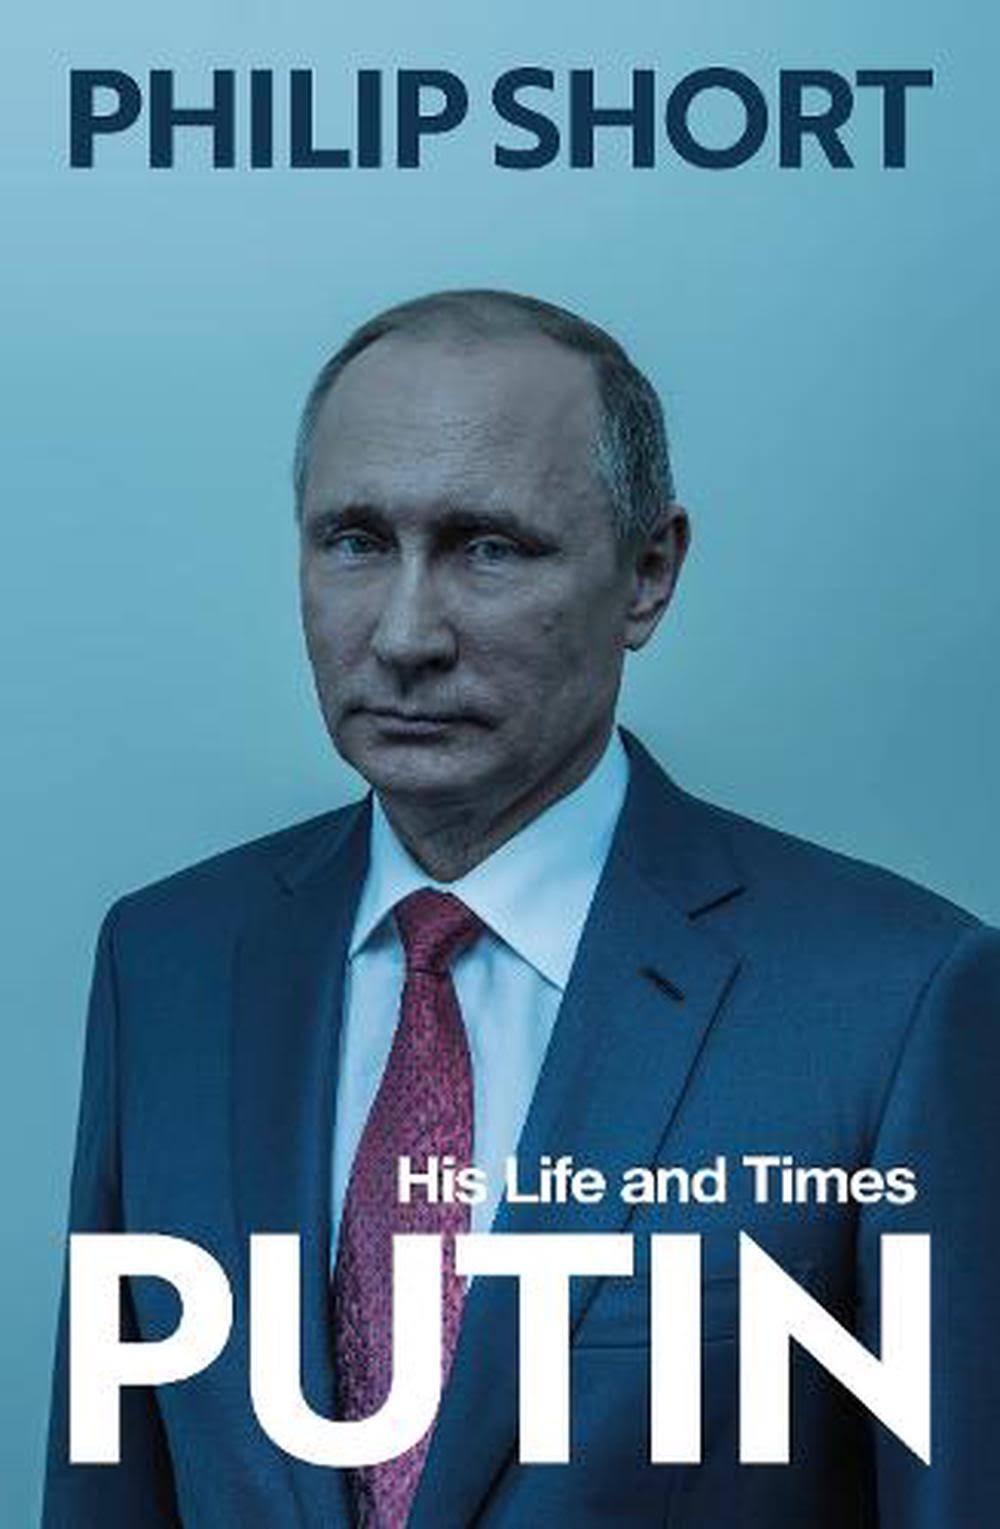 Putin [Book]